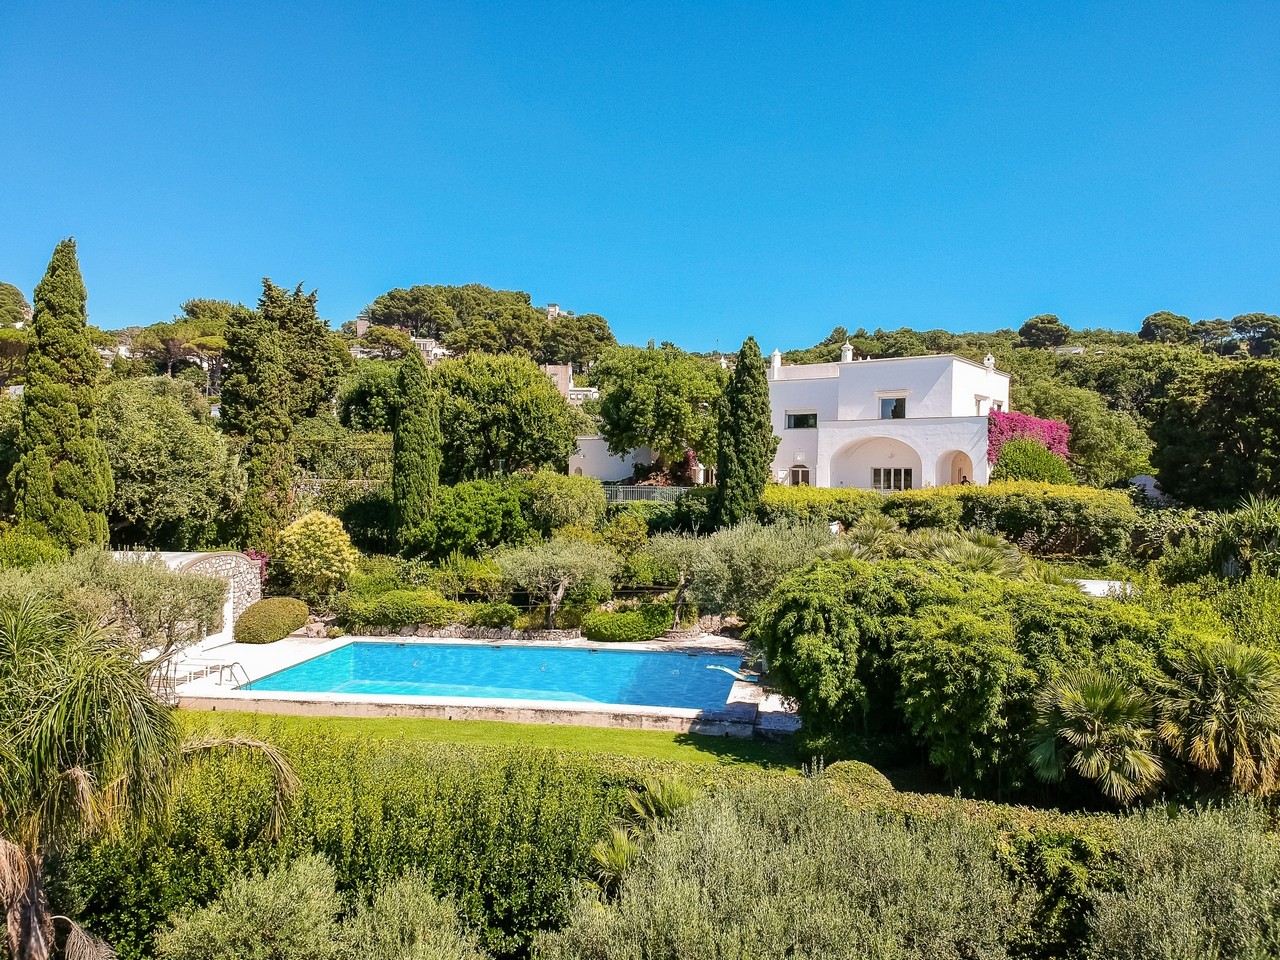 La villa di Capri dove visse Totò è in vendita